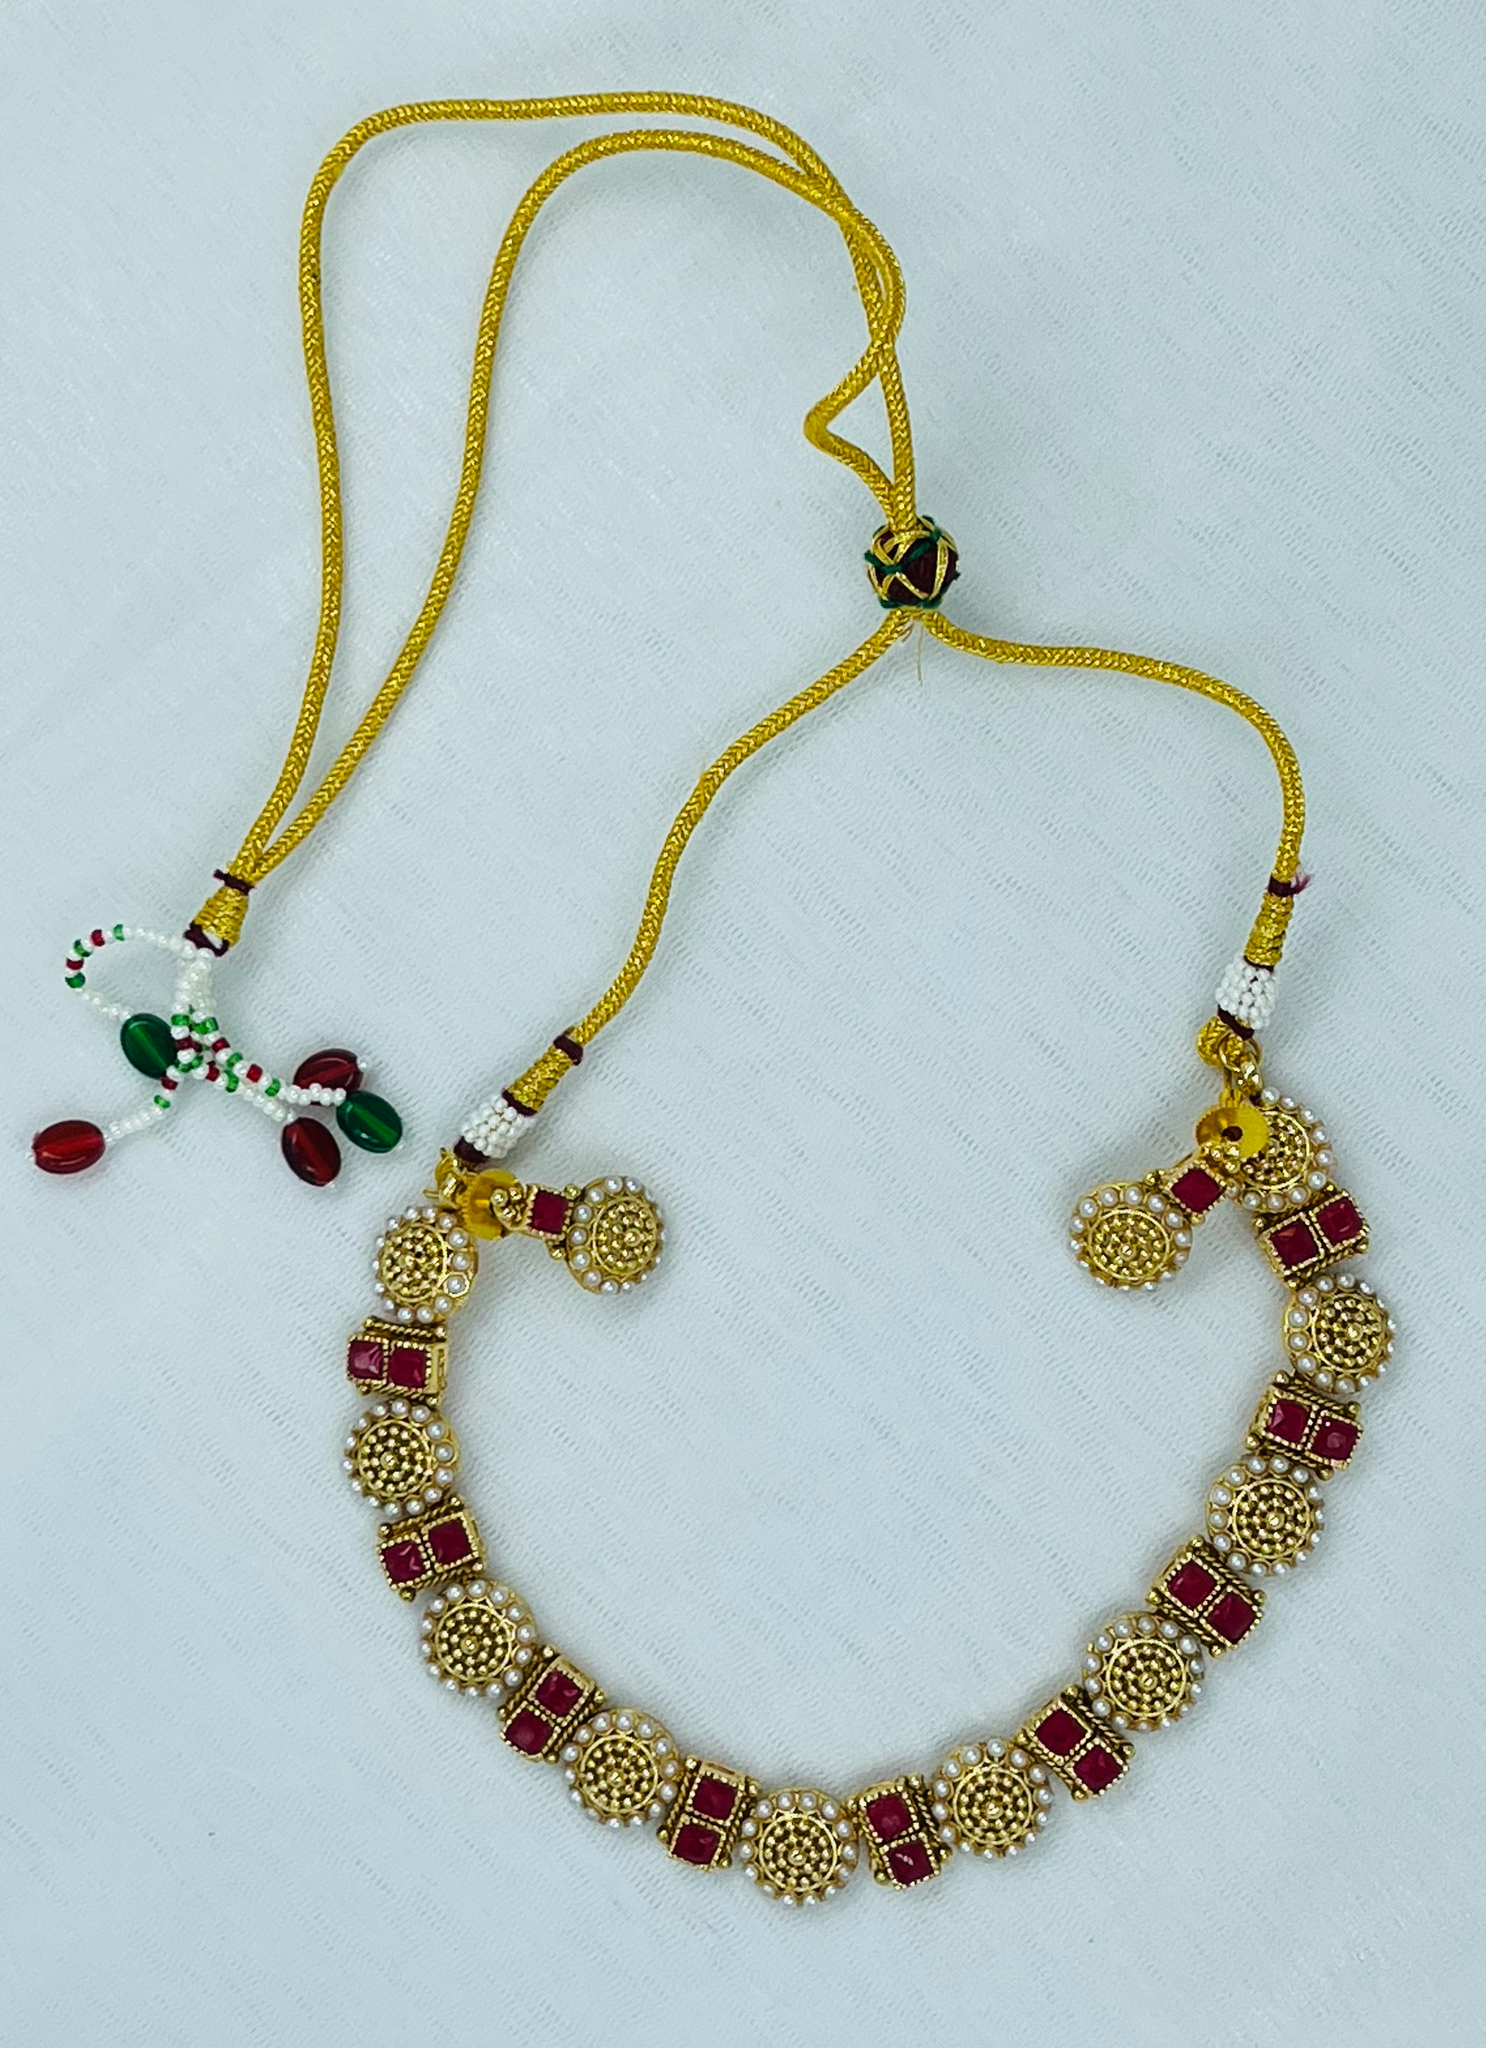 Gold & Diamond Necklace imitation jewelry